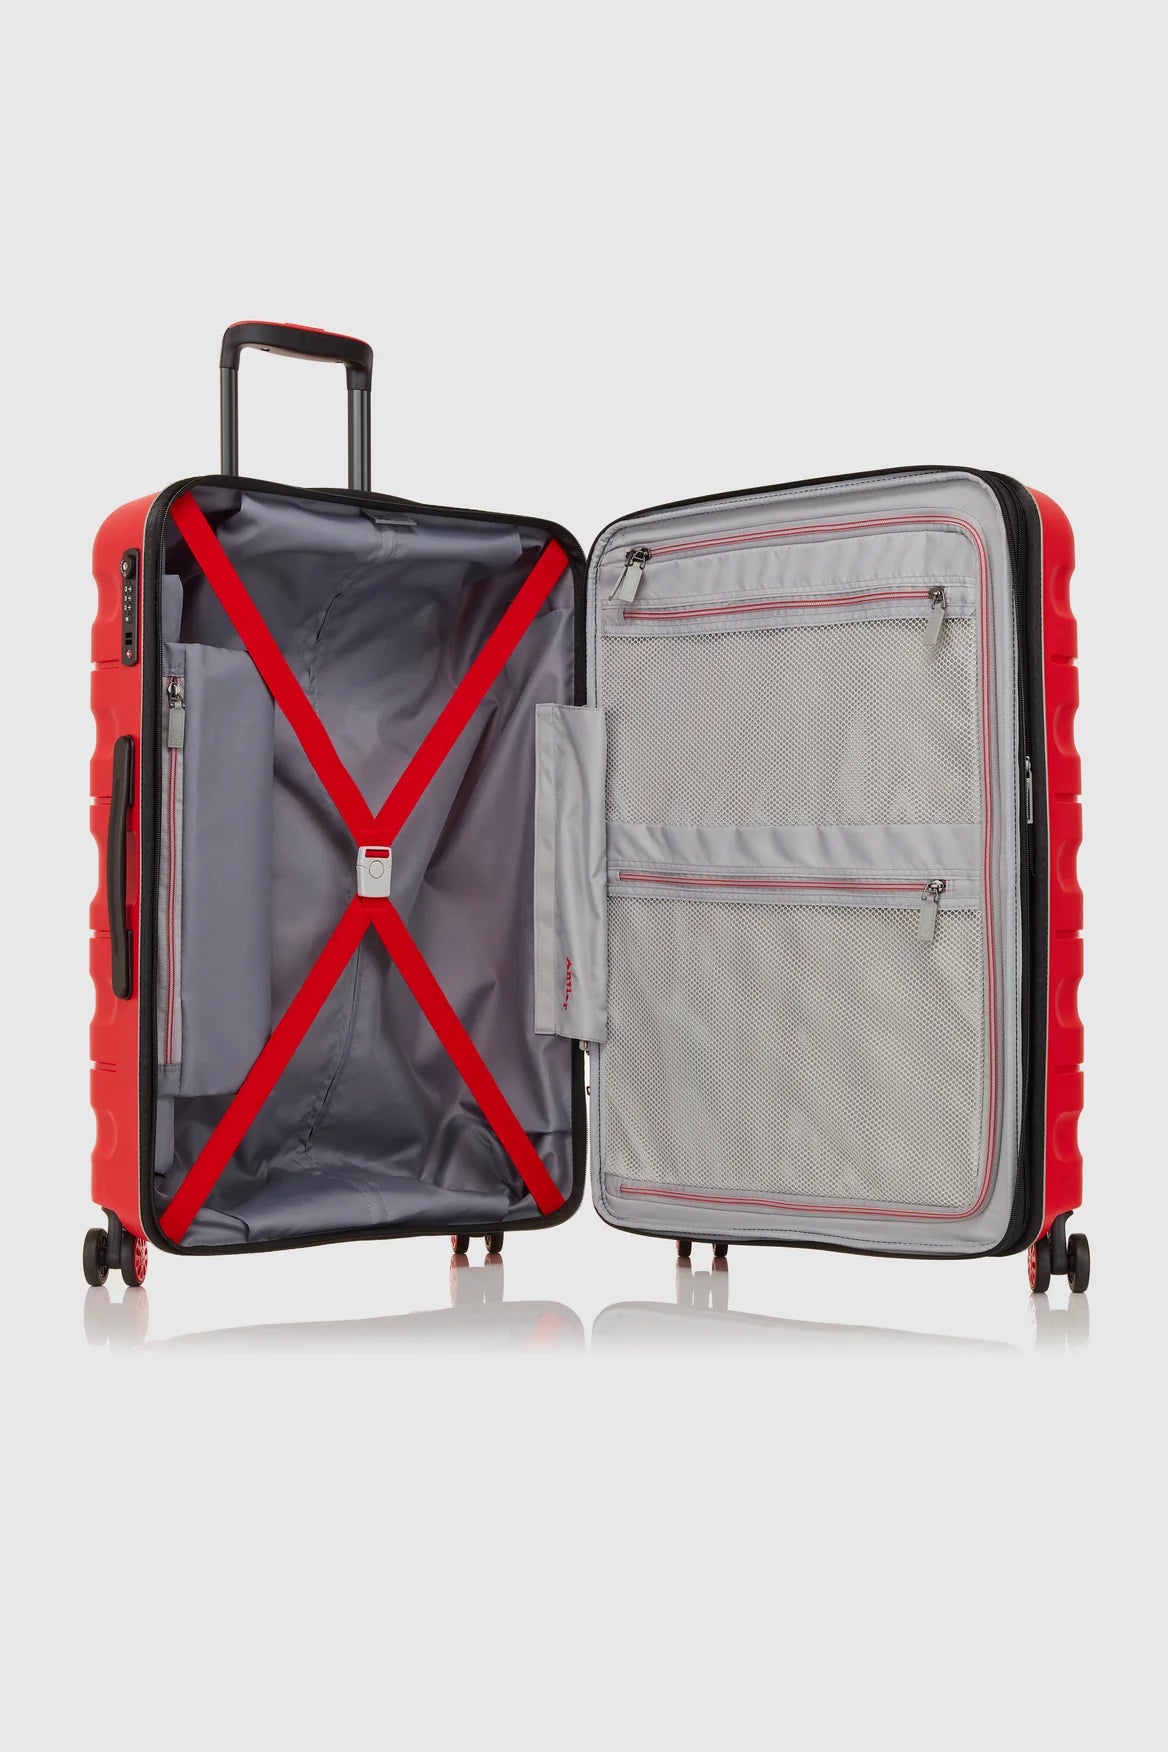 Antler – Lincoln Medium 68cm Hardside 4 Wheel Suitcase – Red